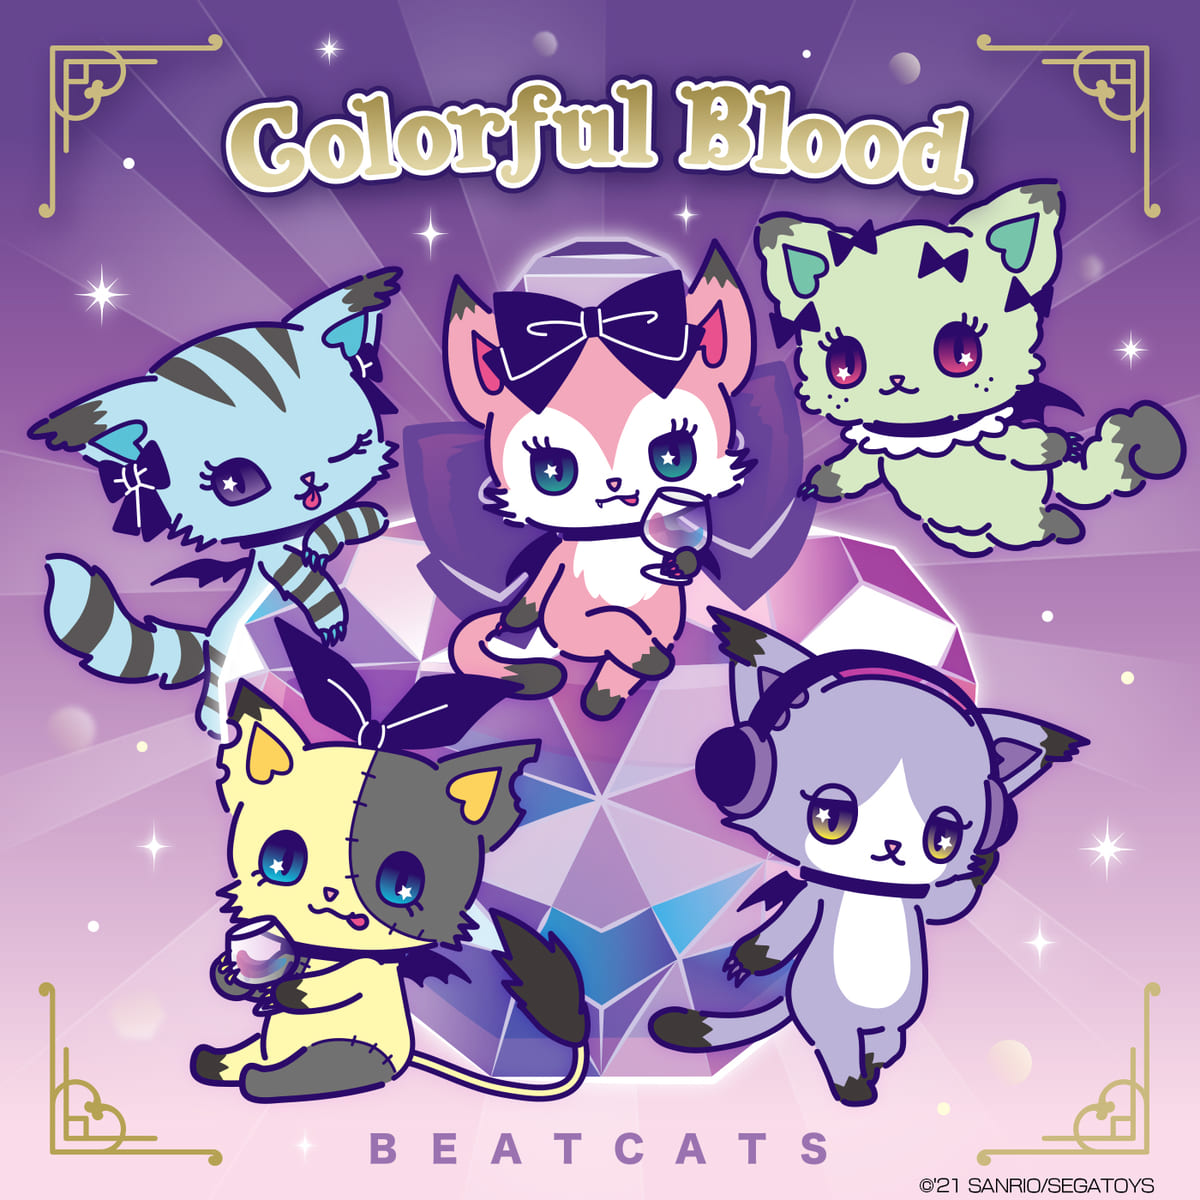 「Beatcats(ビートキャッツ)」第6弾楽曲 MV『Colorful Blood(カラフル ブラッド)』